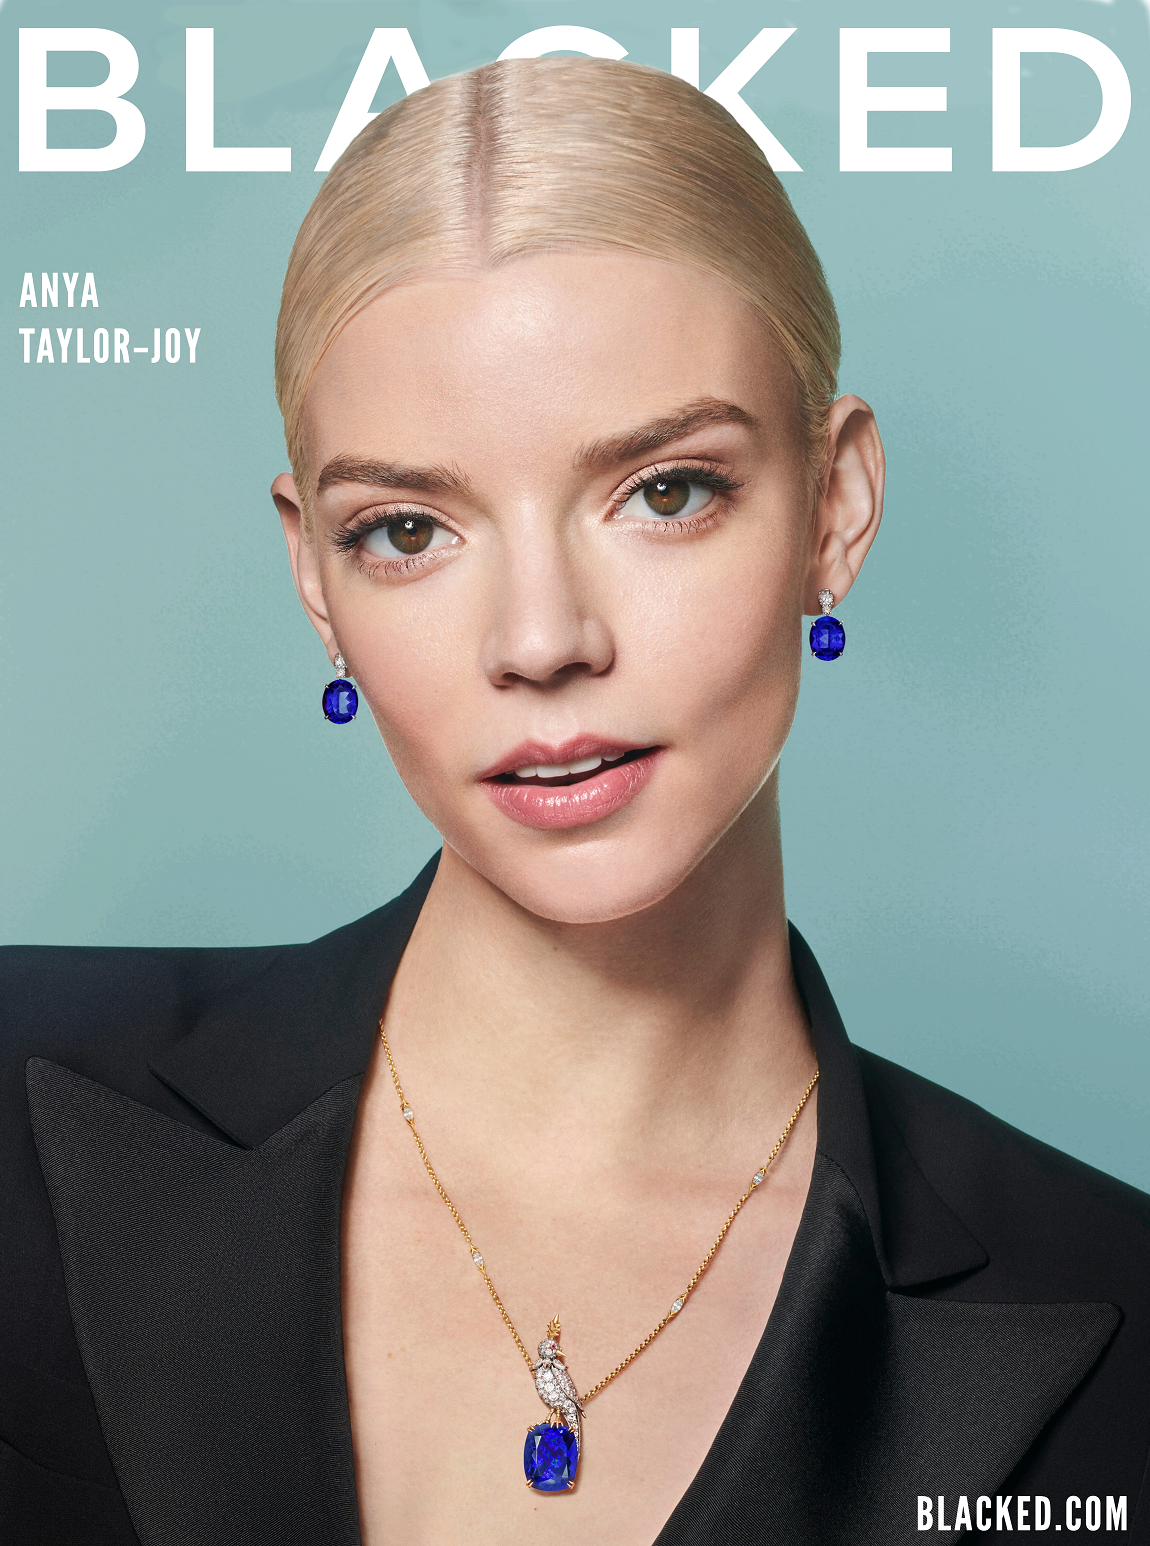 Anya Taylor Joy Actress Blonde Women Necklace Earring Celebrity Portrait Studio 1150x1546